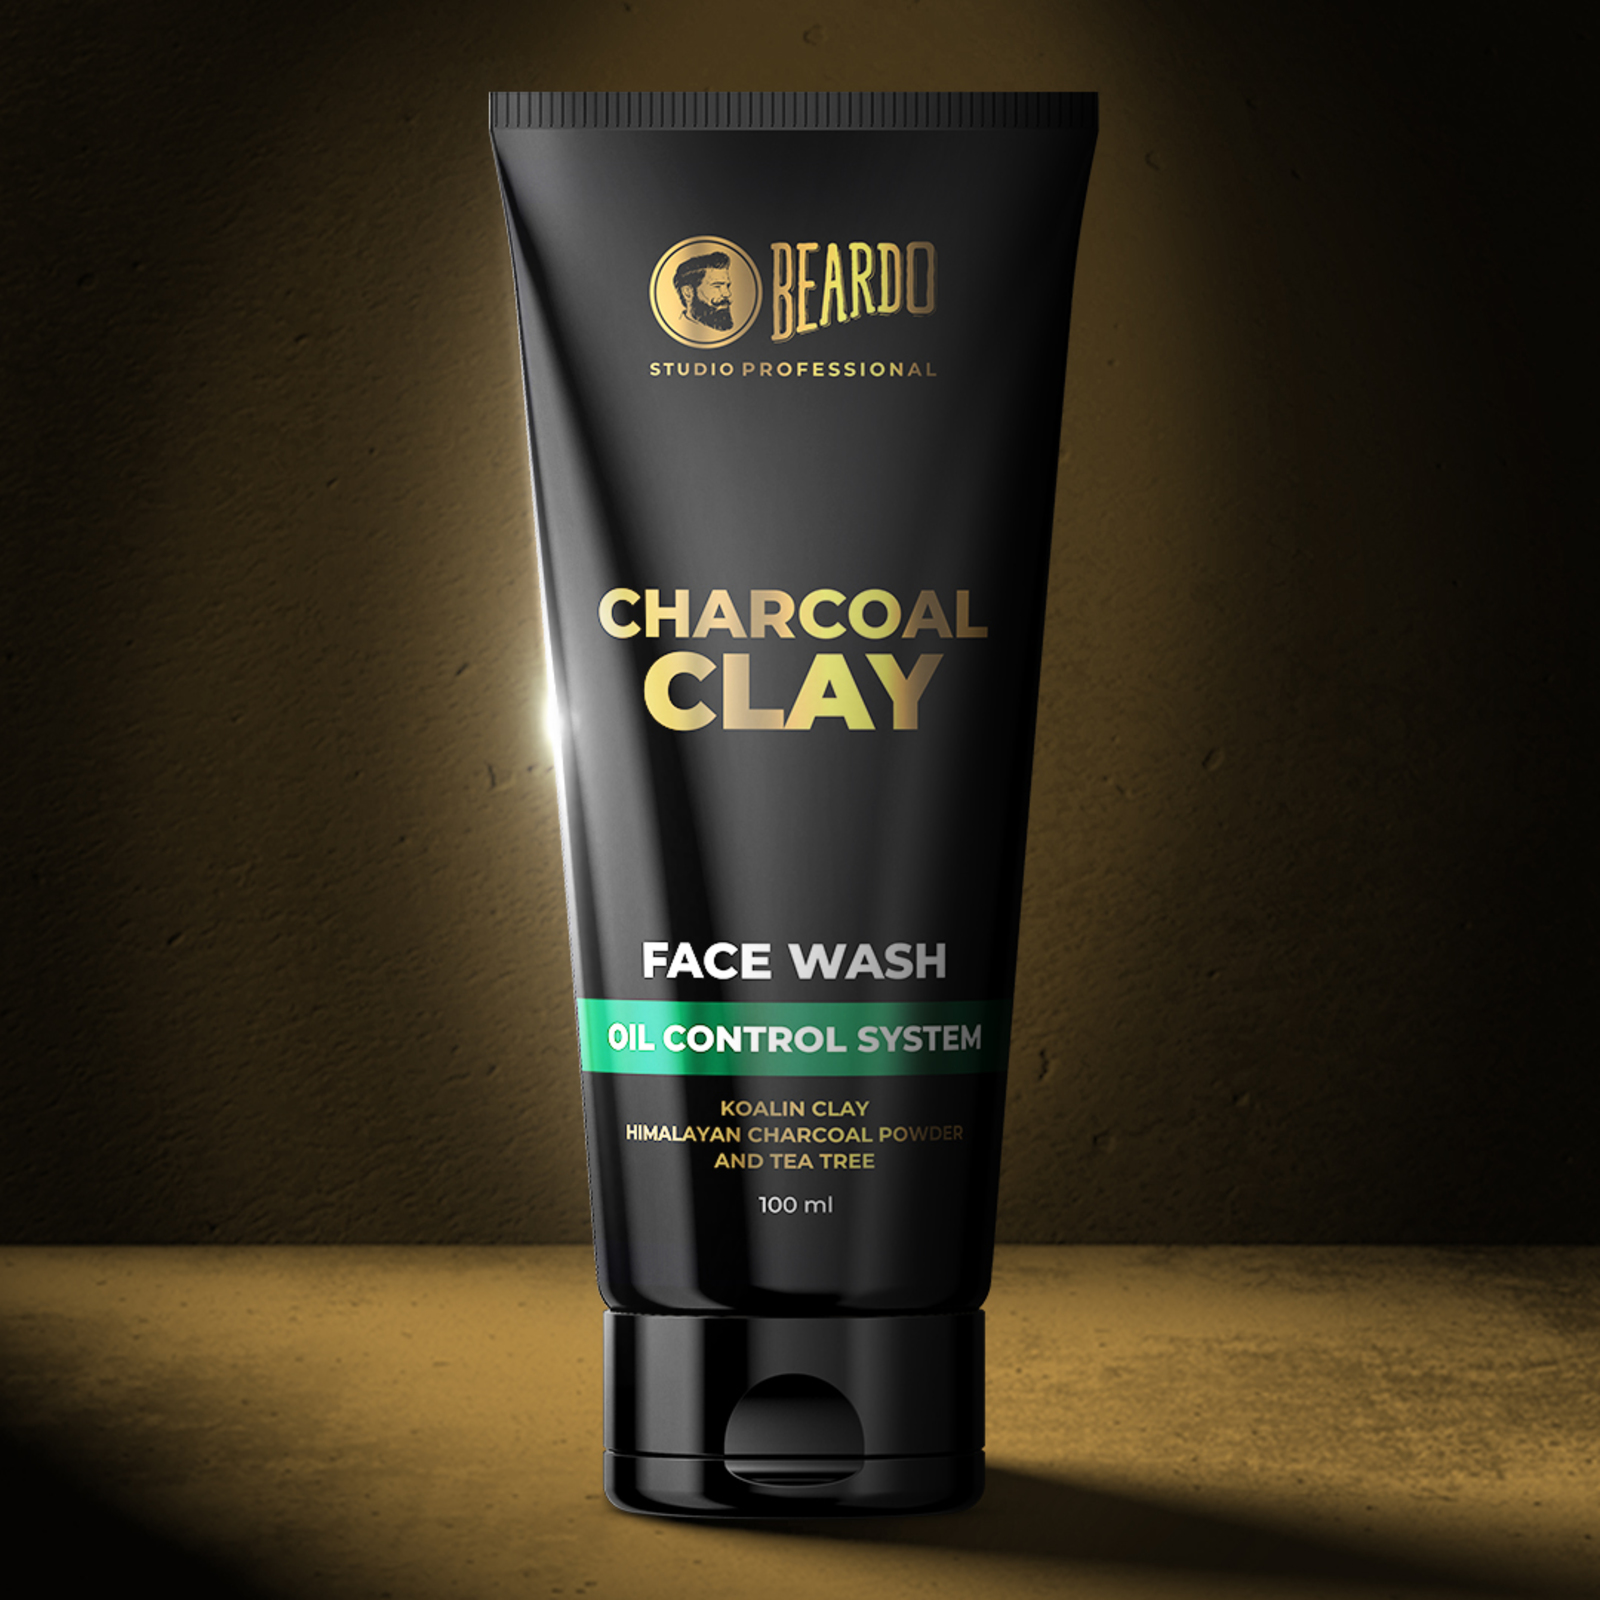 Beardo Studio Professional Charcoal Clay Facewash coupon code